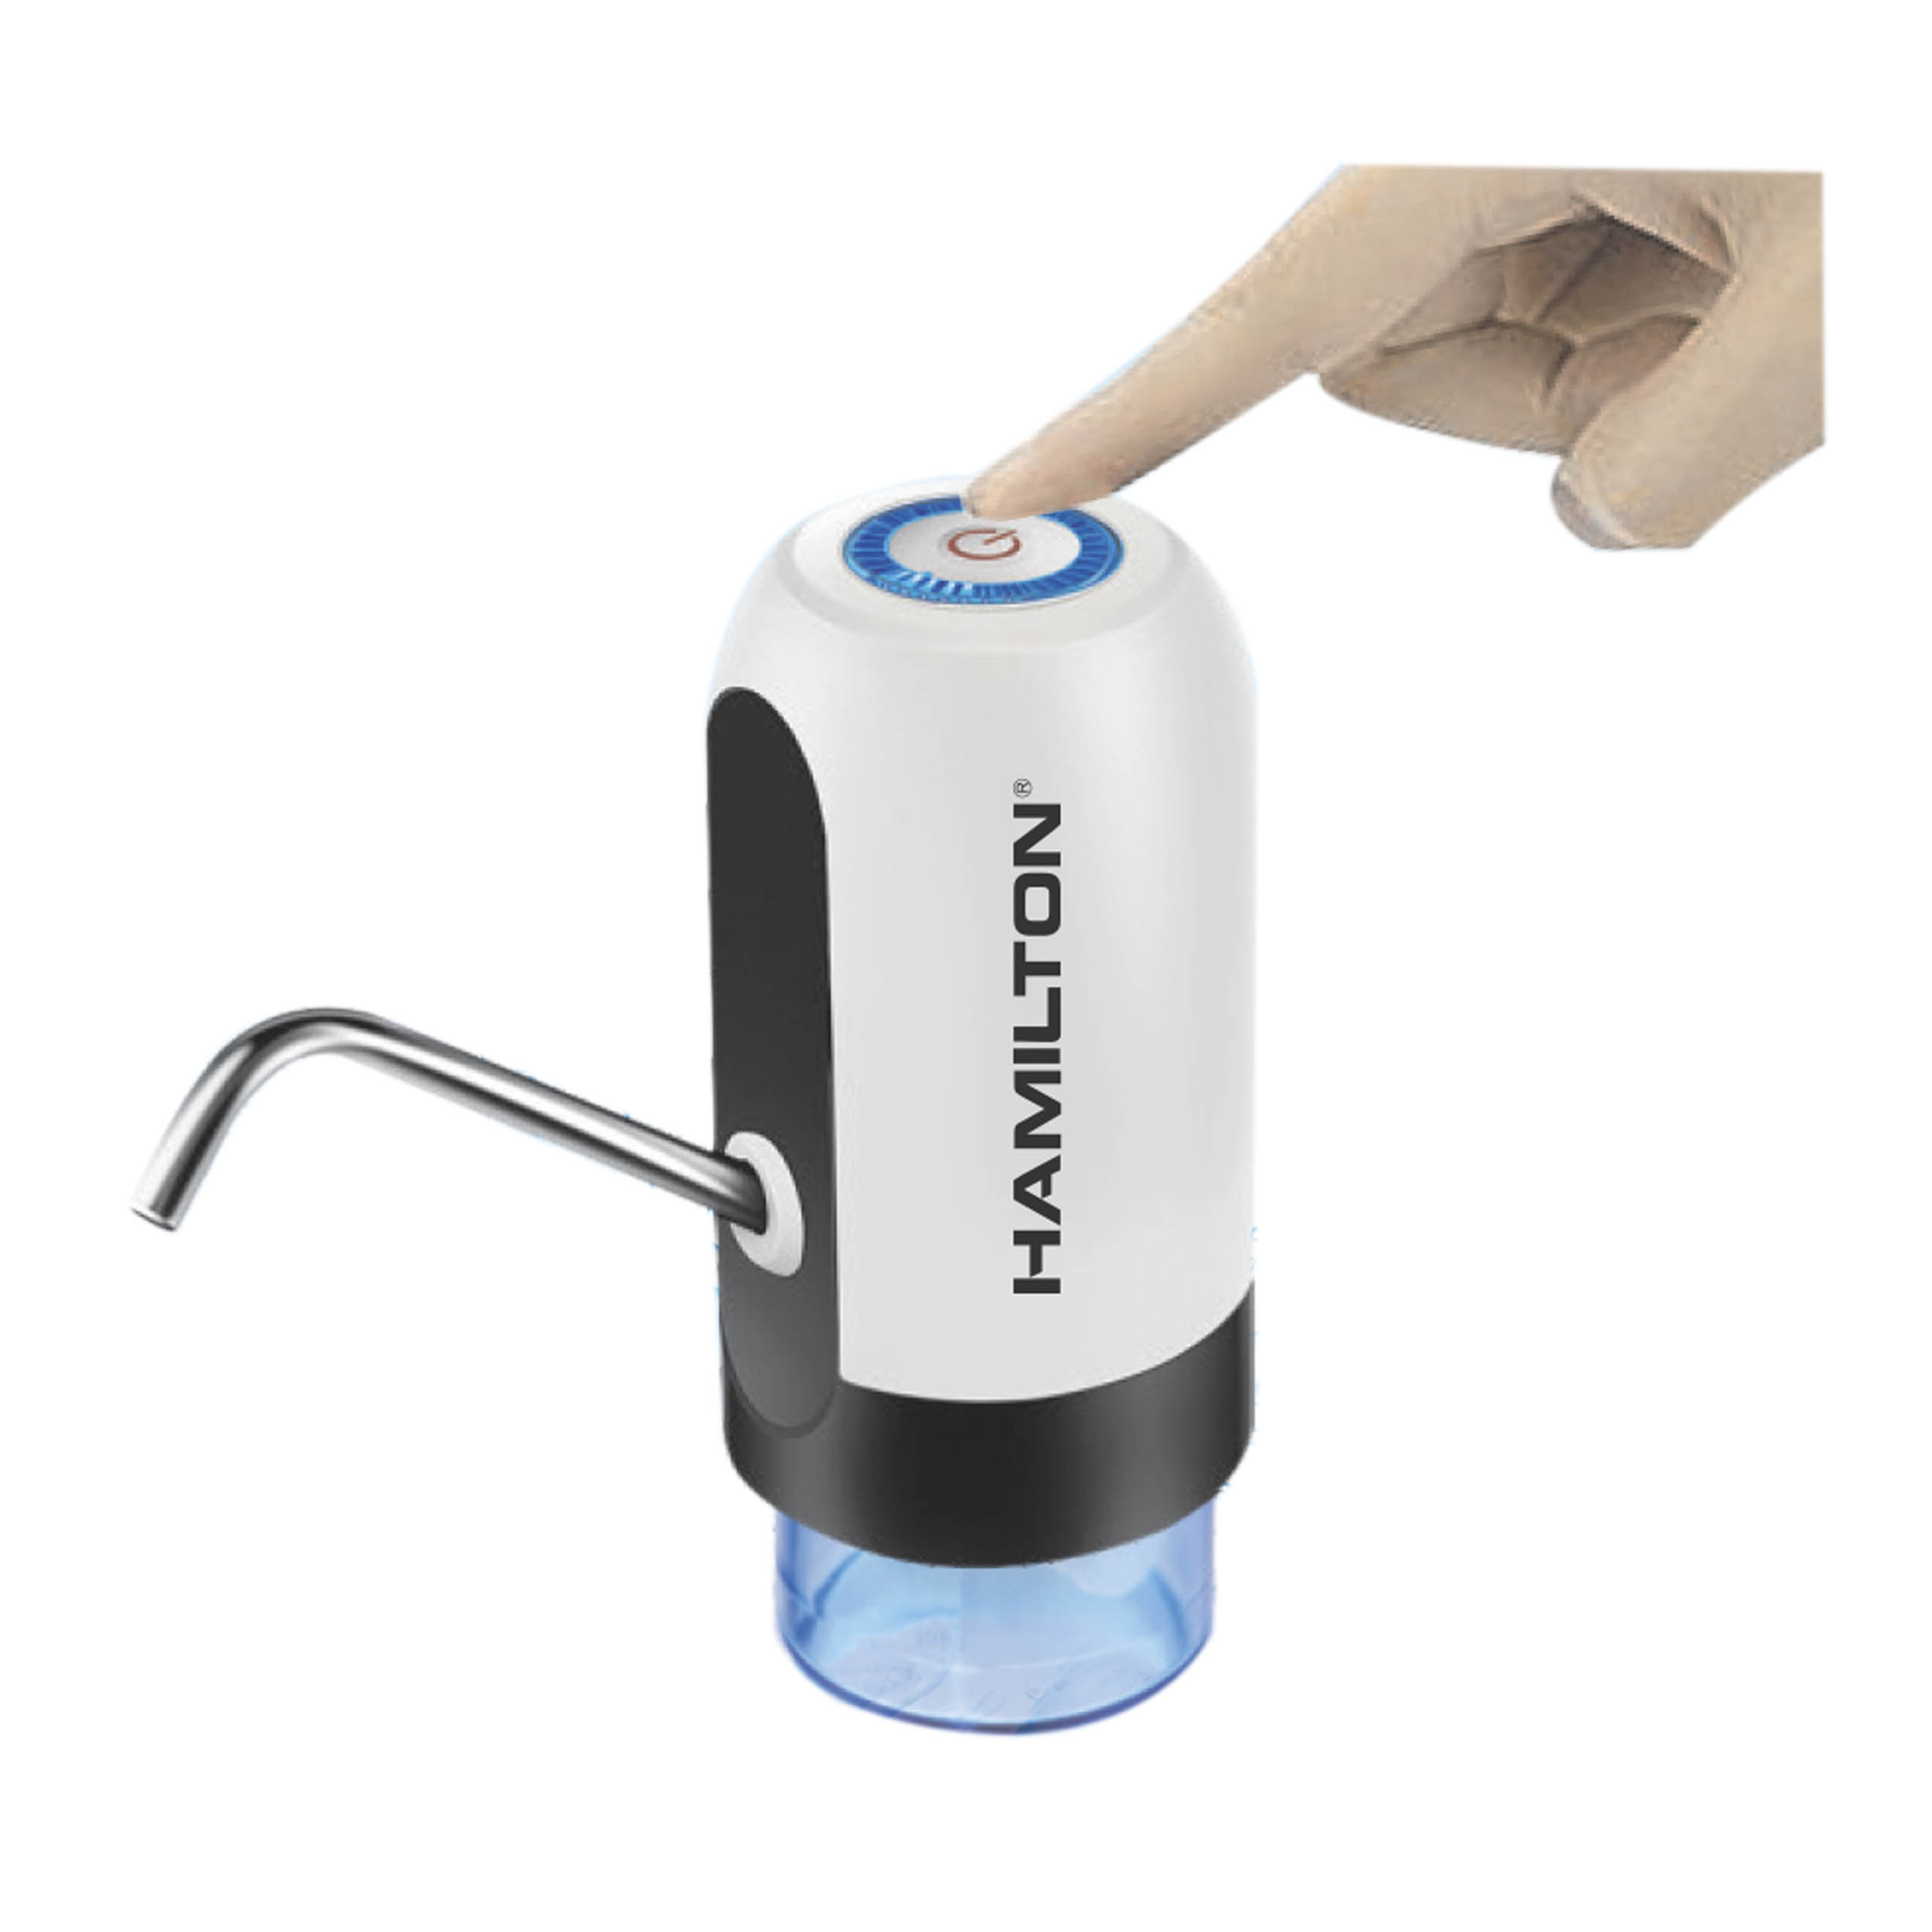 Digital Display Inteligent Functioning Intelligent Protection No Radiation Energy Saving OF 30% Hamilton Mini Portable Water Dispenser